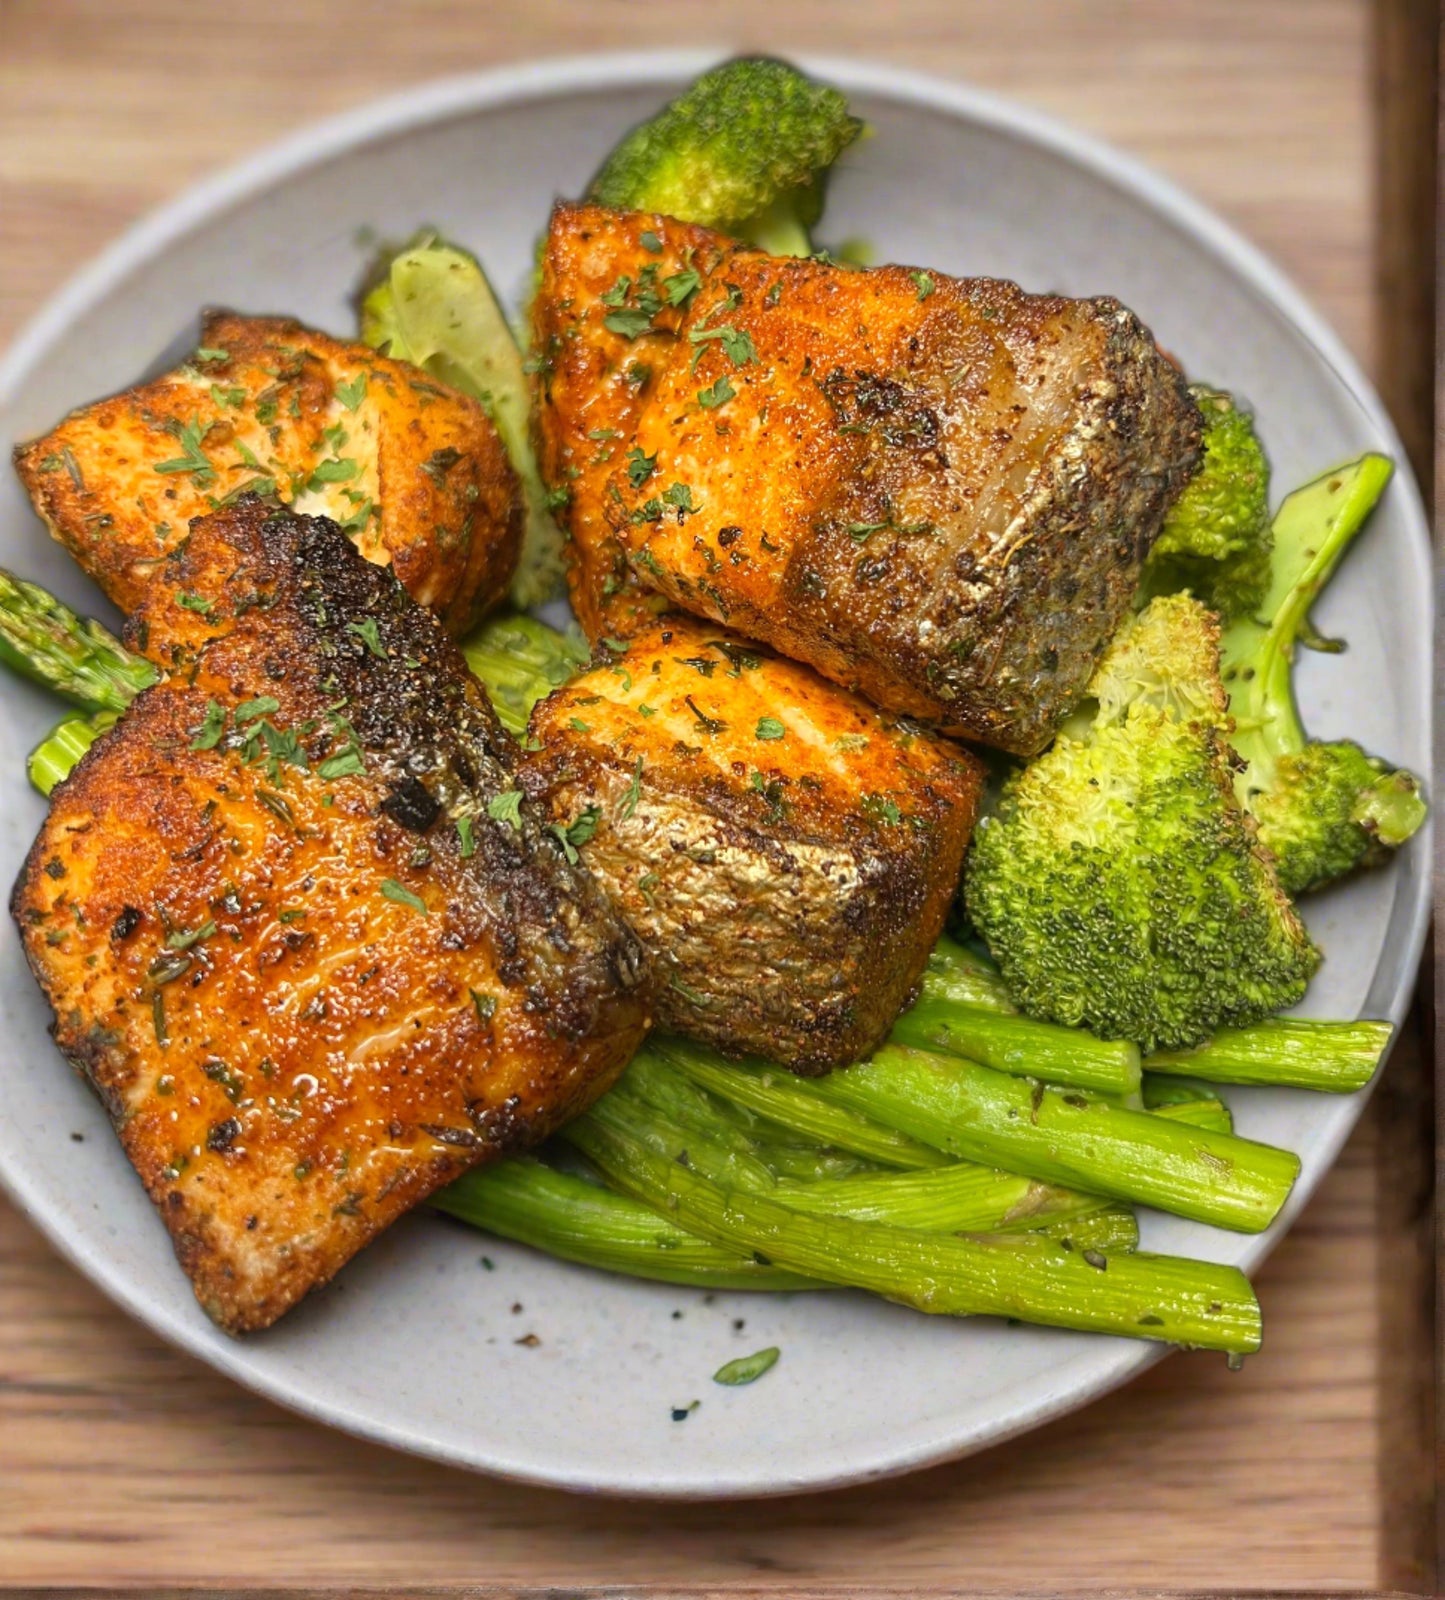 Blackened Salmon w/ Roasted Broccoli & Asparagus